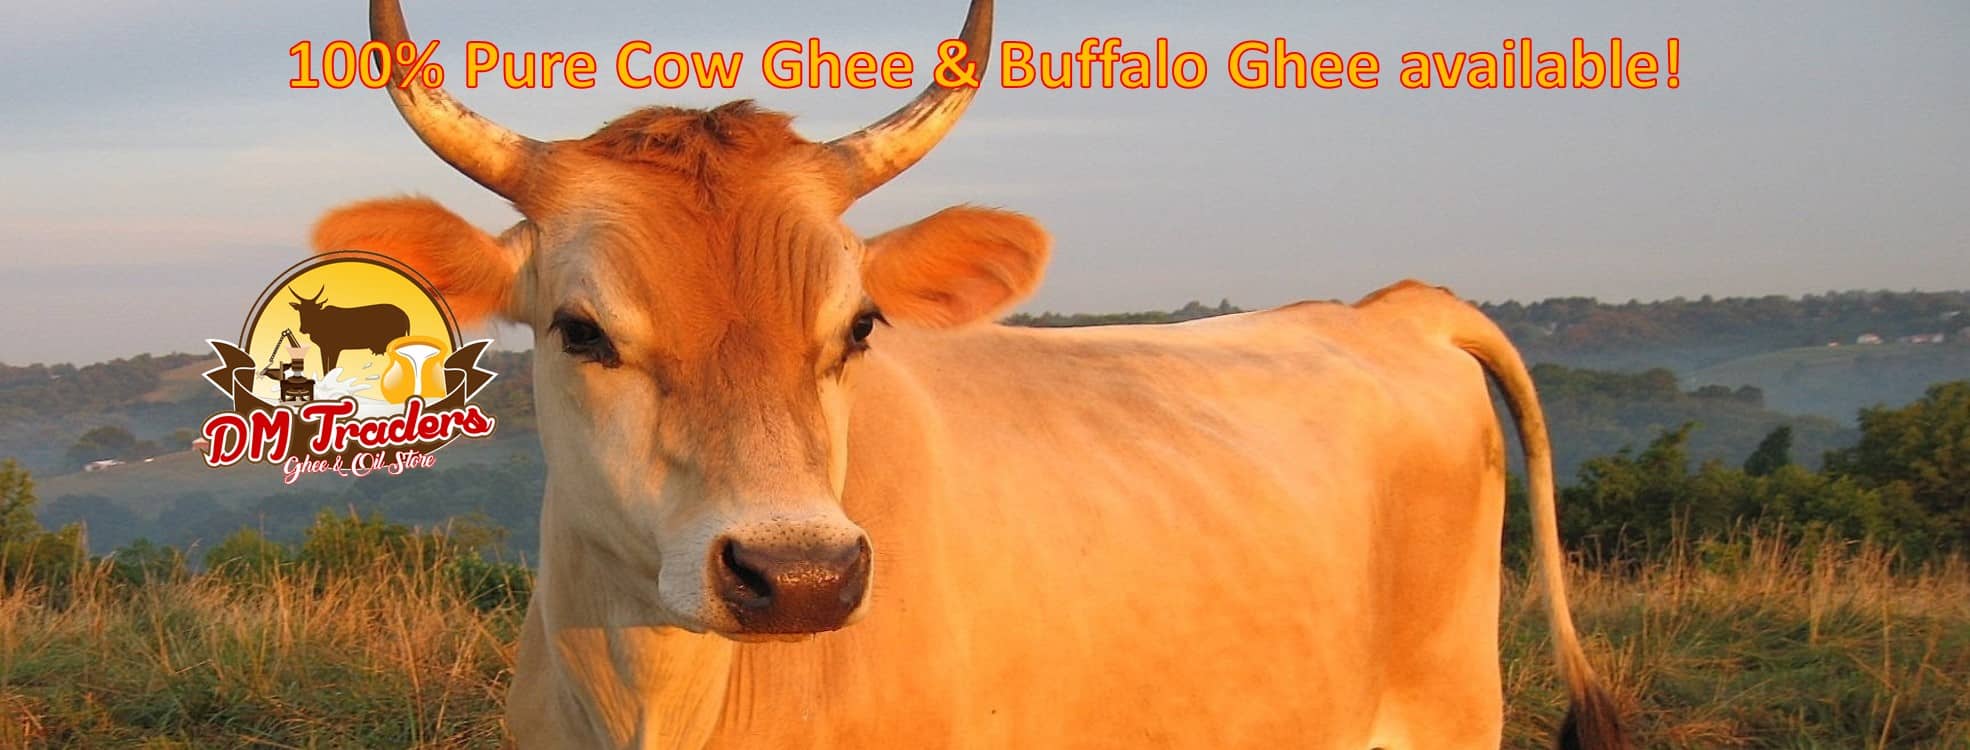 pure cow ghee